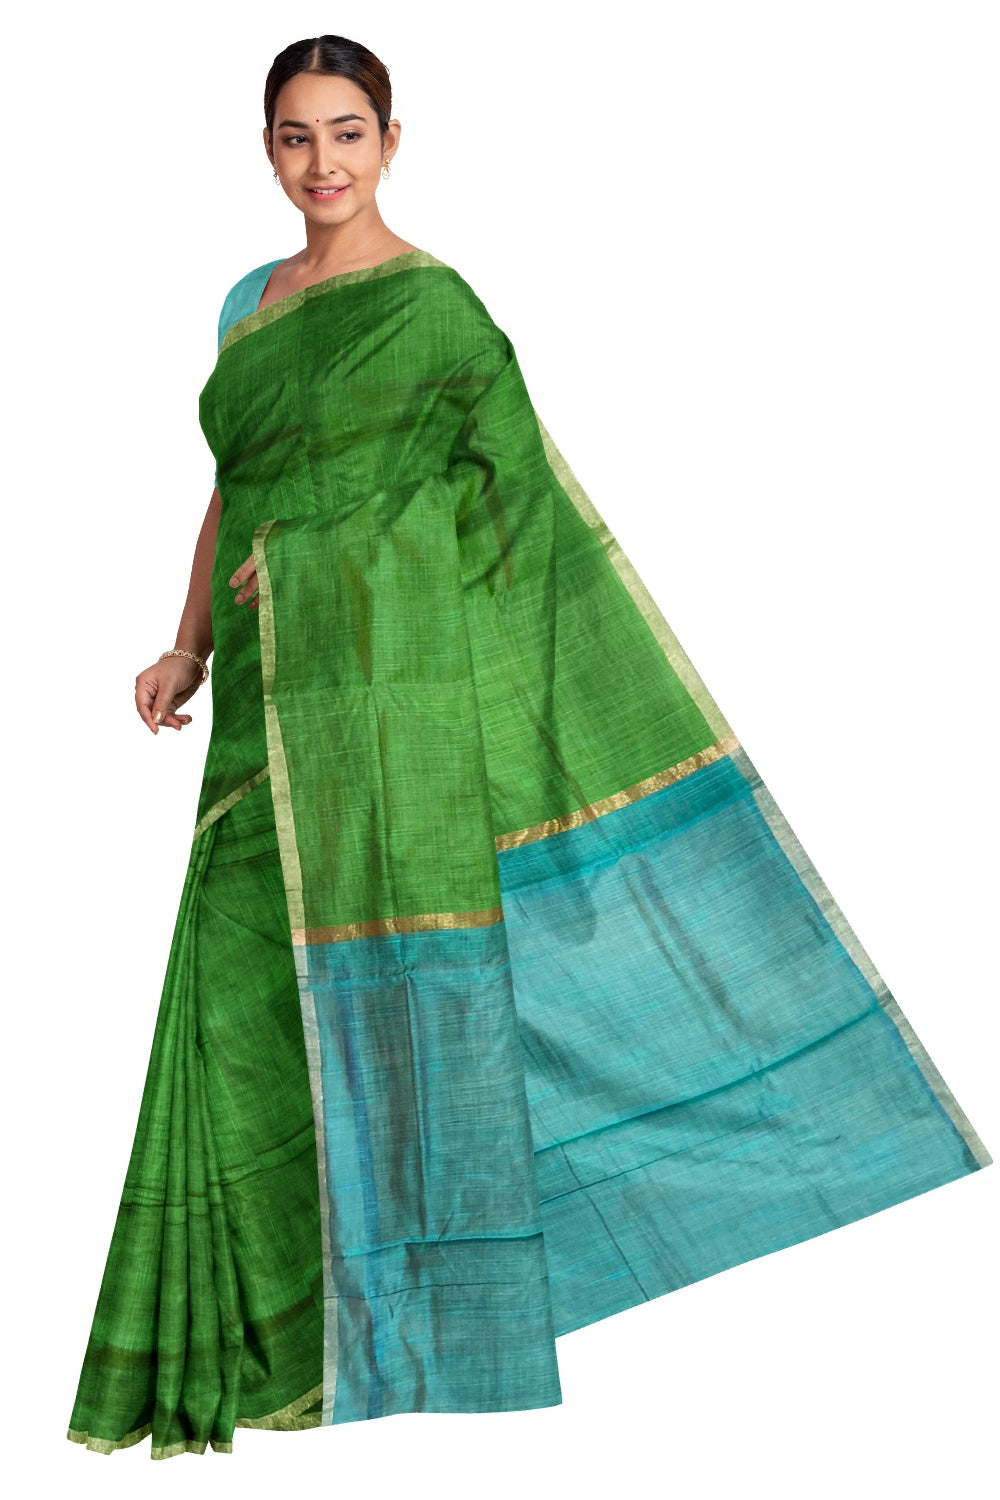 Southloom Kosa / Tussar Green Saree with Blue Pallu